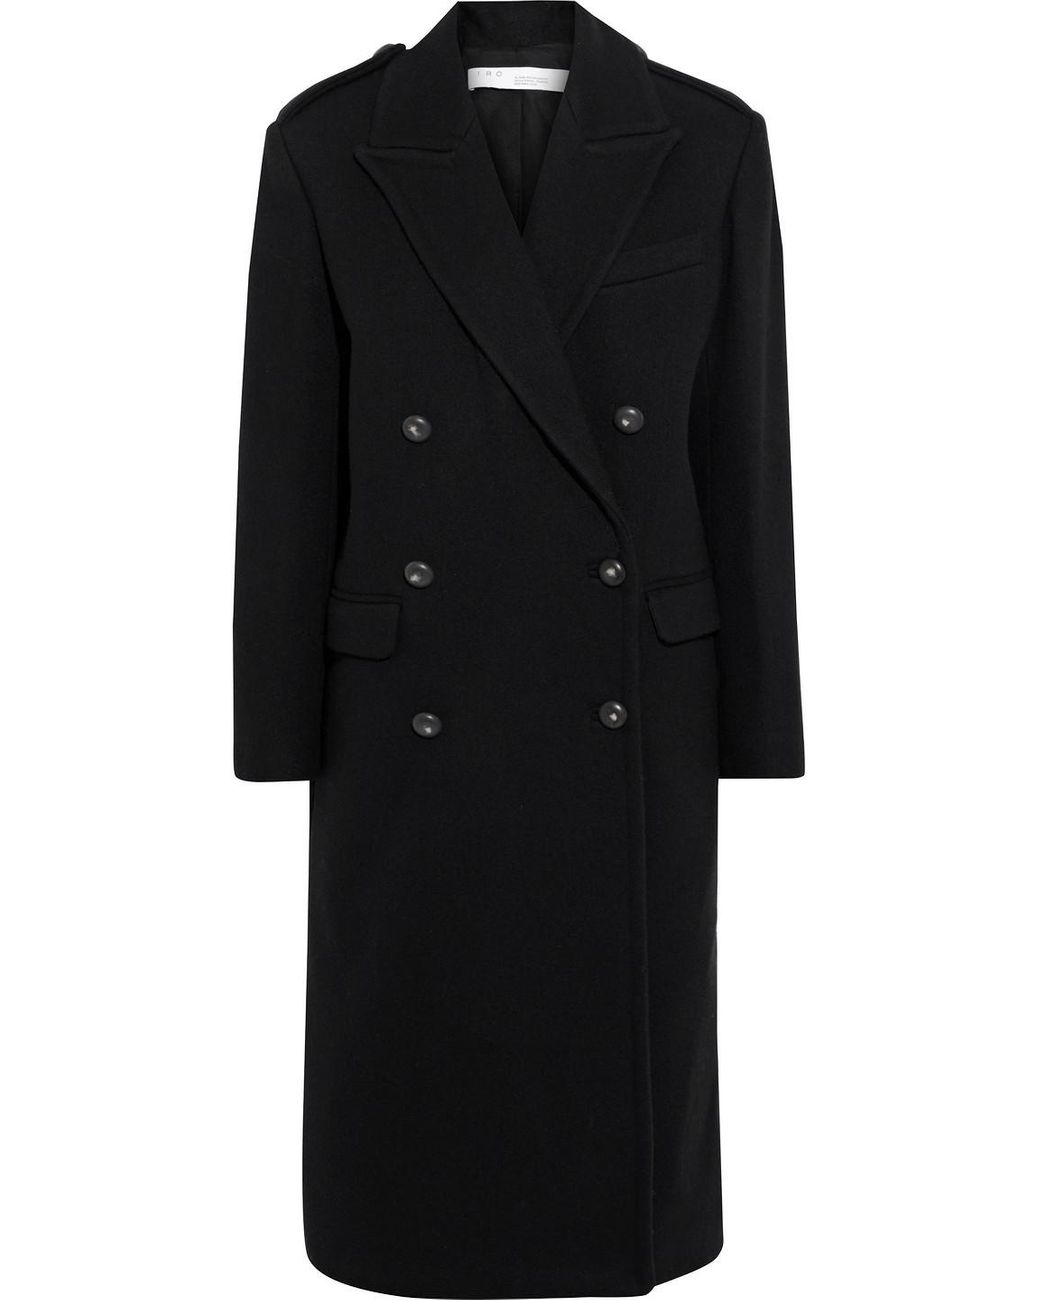 IRO Ligu Double-breasted Wool-blend Felt Coat in Black | Lyst